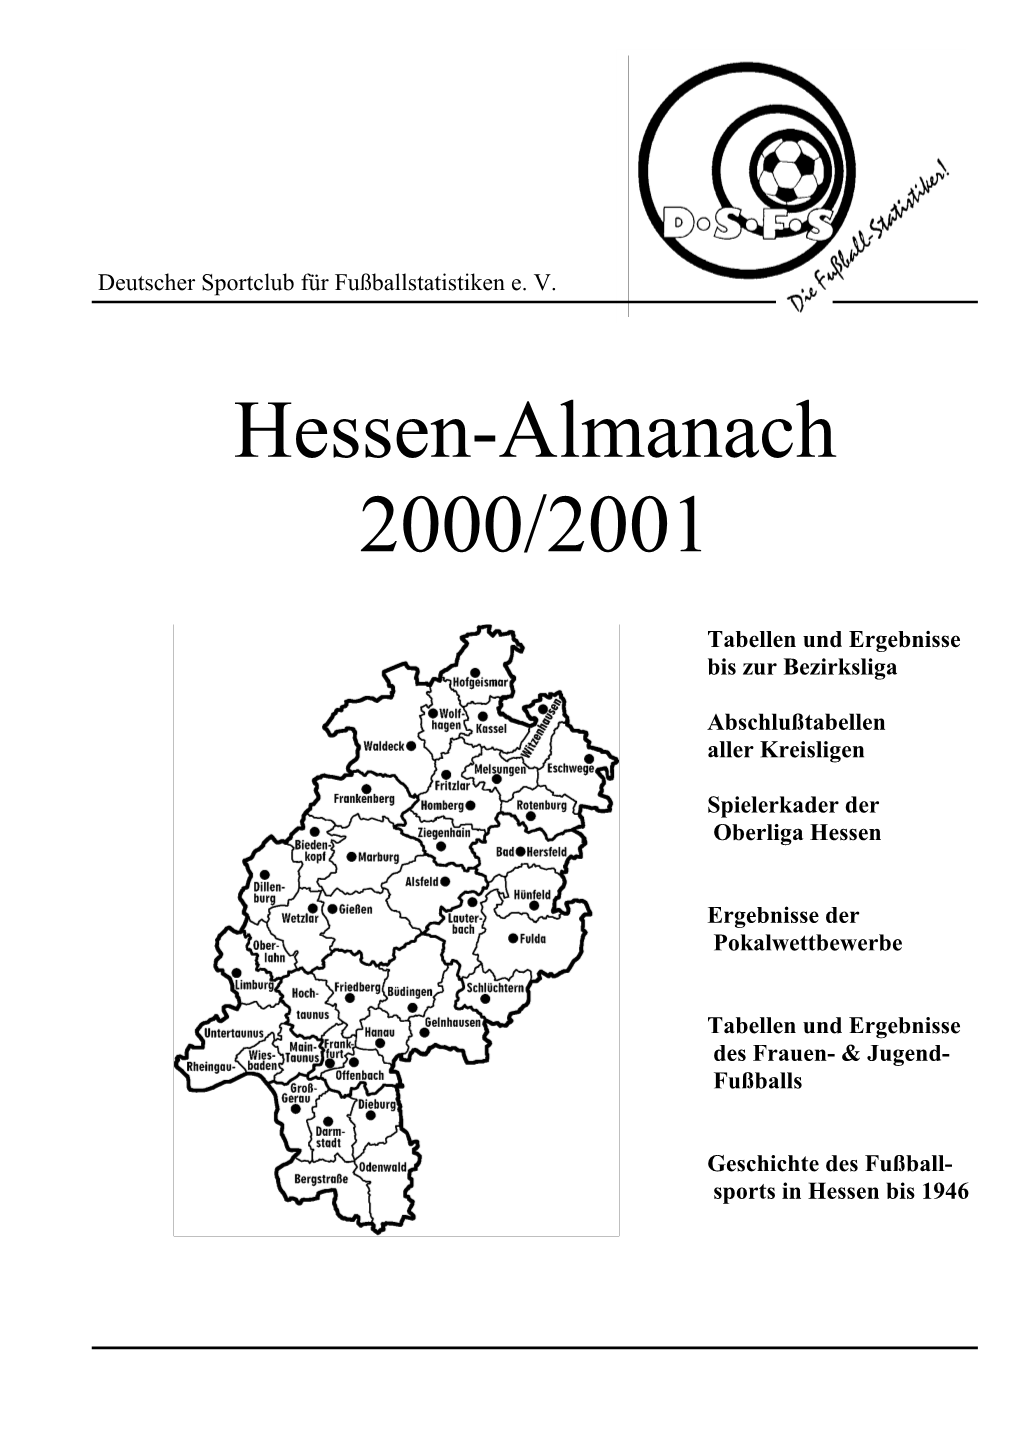 Hessen-Almanach 2000/2001